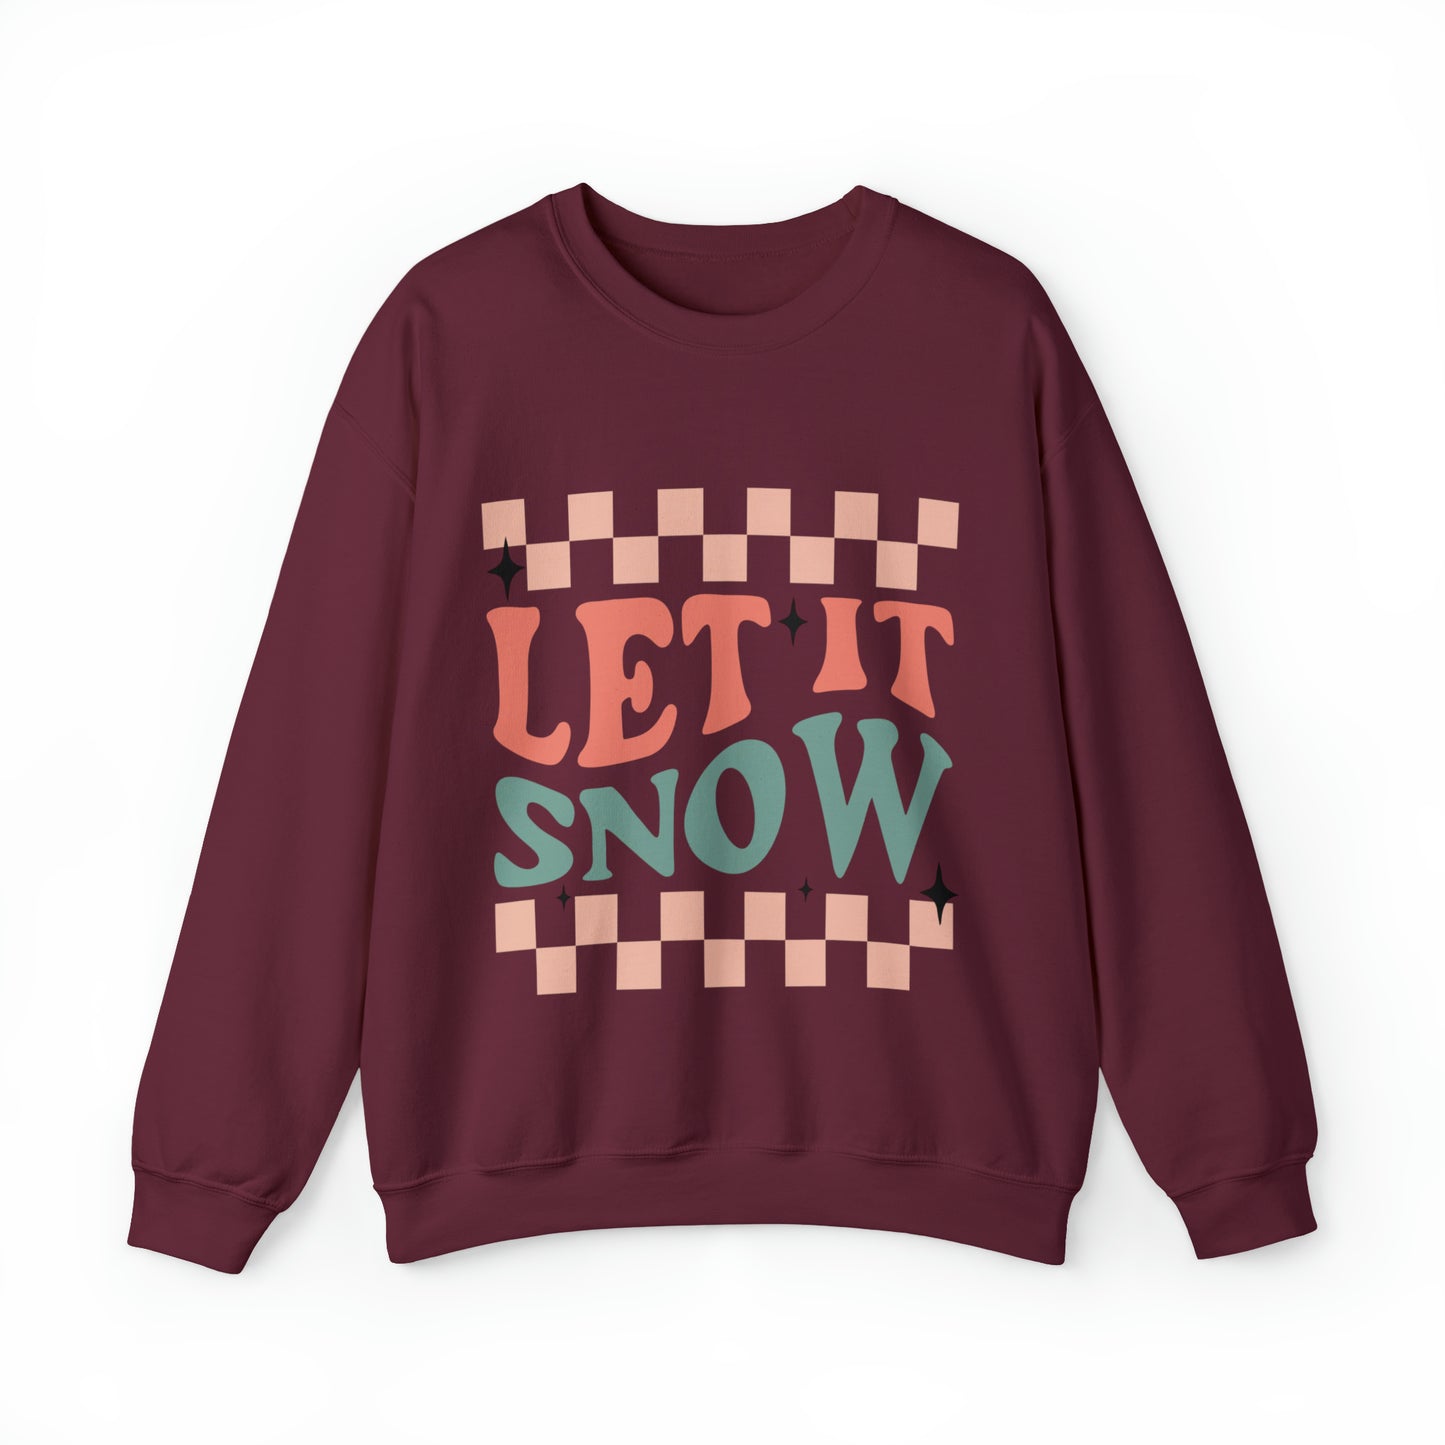 Let it snow Women's Christmas Crewneck Sweatshirt